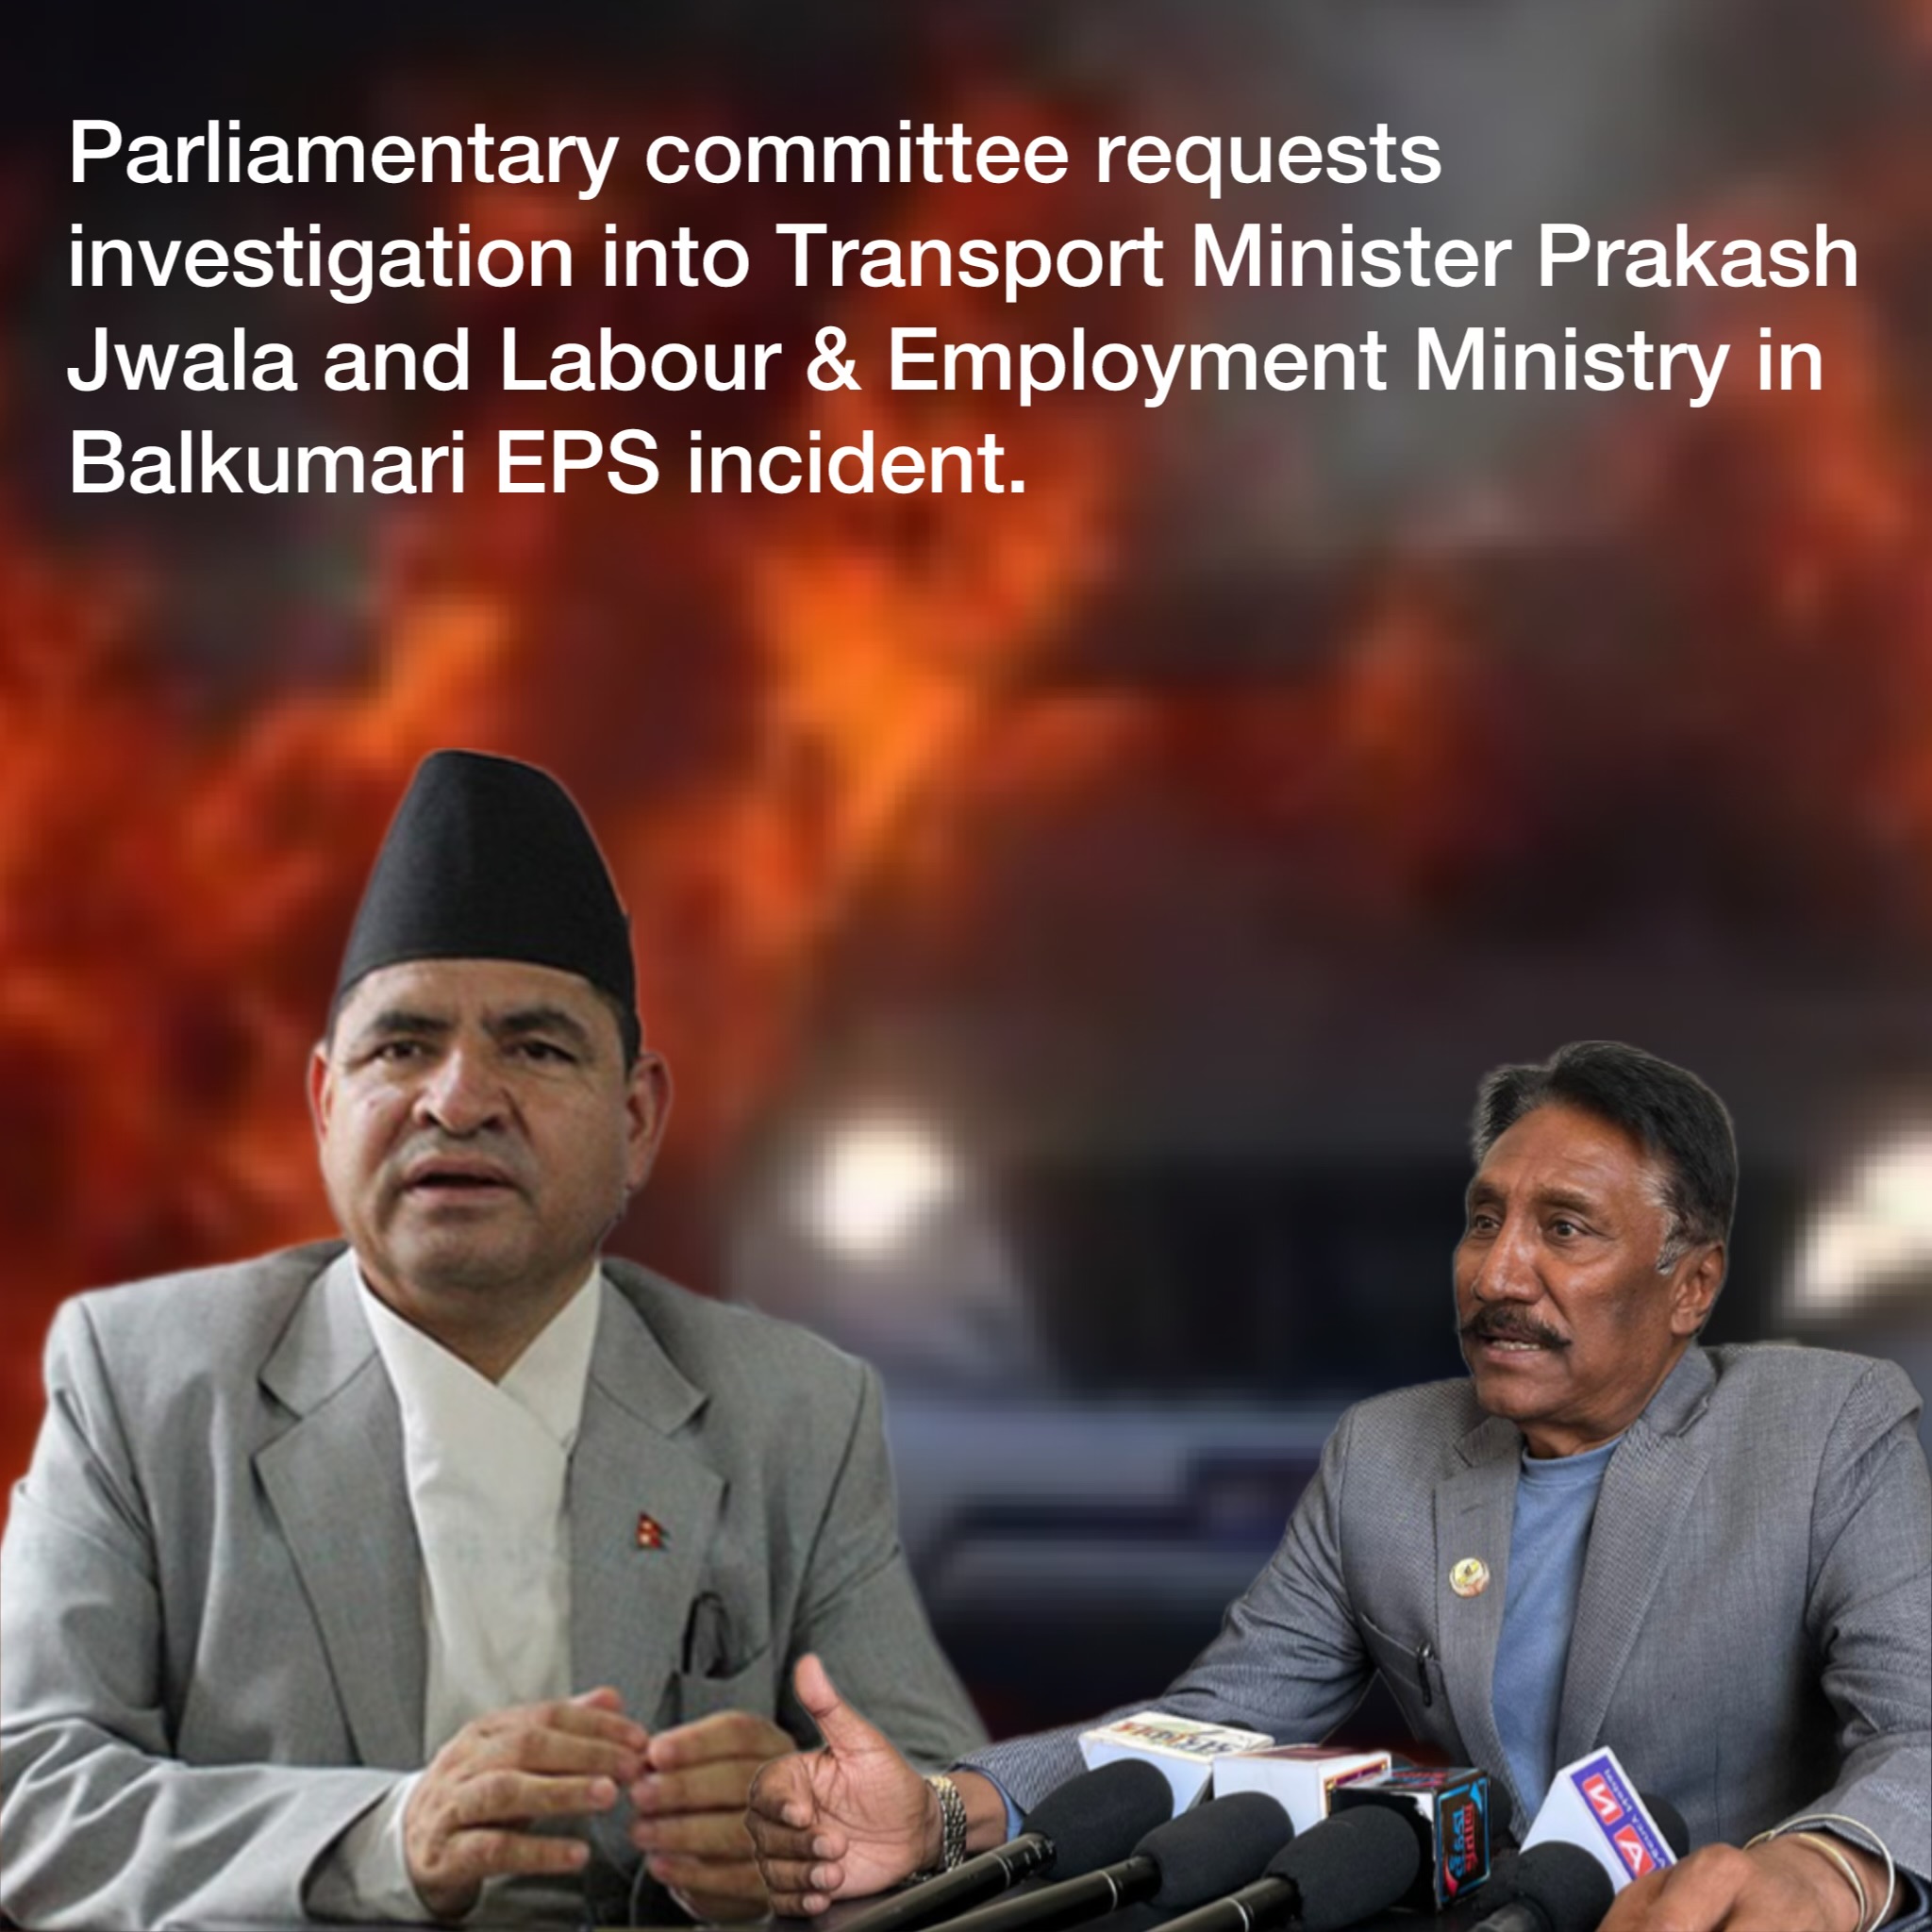 Transport Minister Prakash Jwala and Employment Ministry blamed for Balkumari Incident; Government to investigate